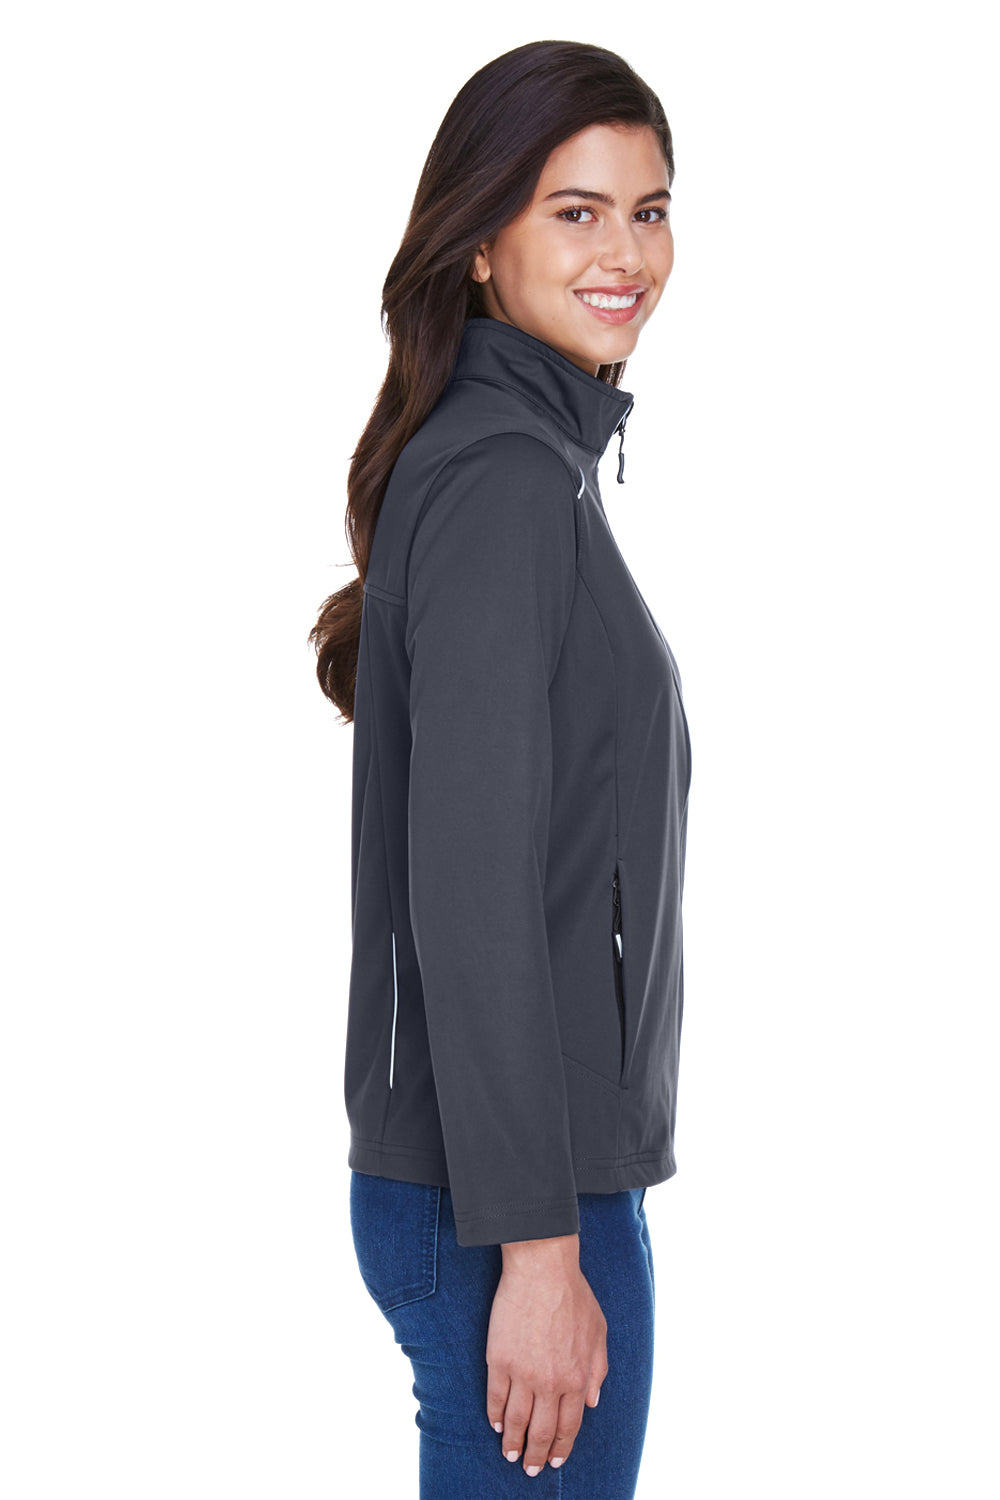 Core 365 CE708W Womens Techno Lite Water Resistant Full Zip Jacket Carbon Grey Side